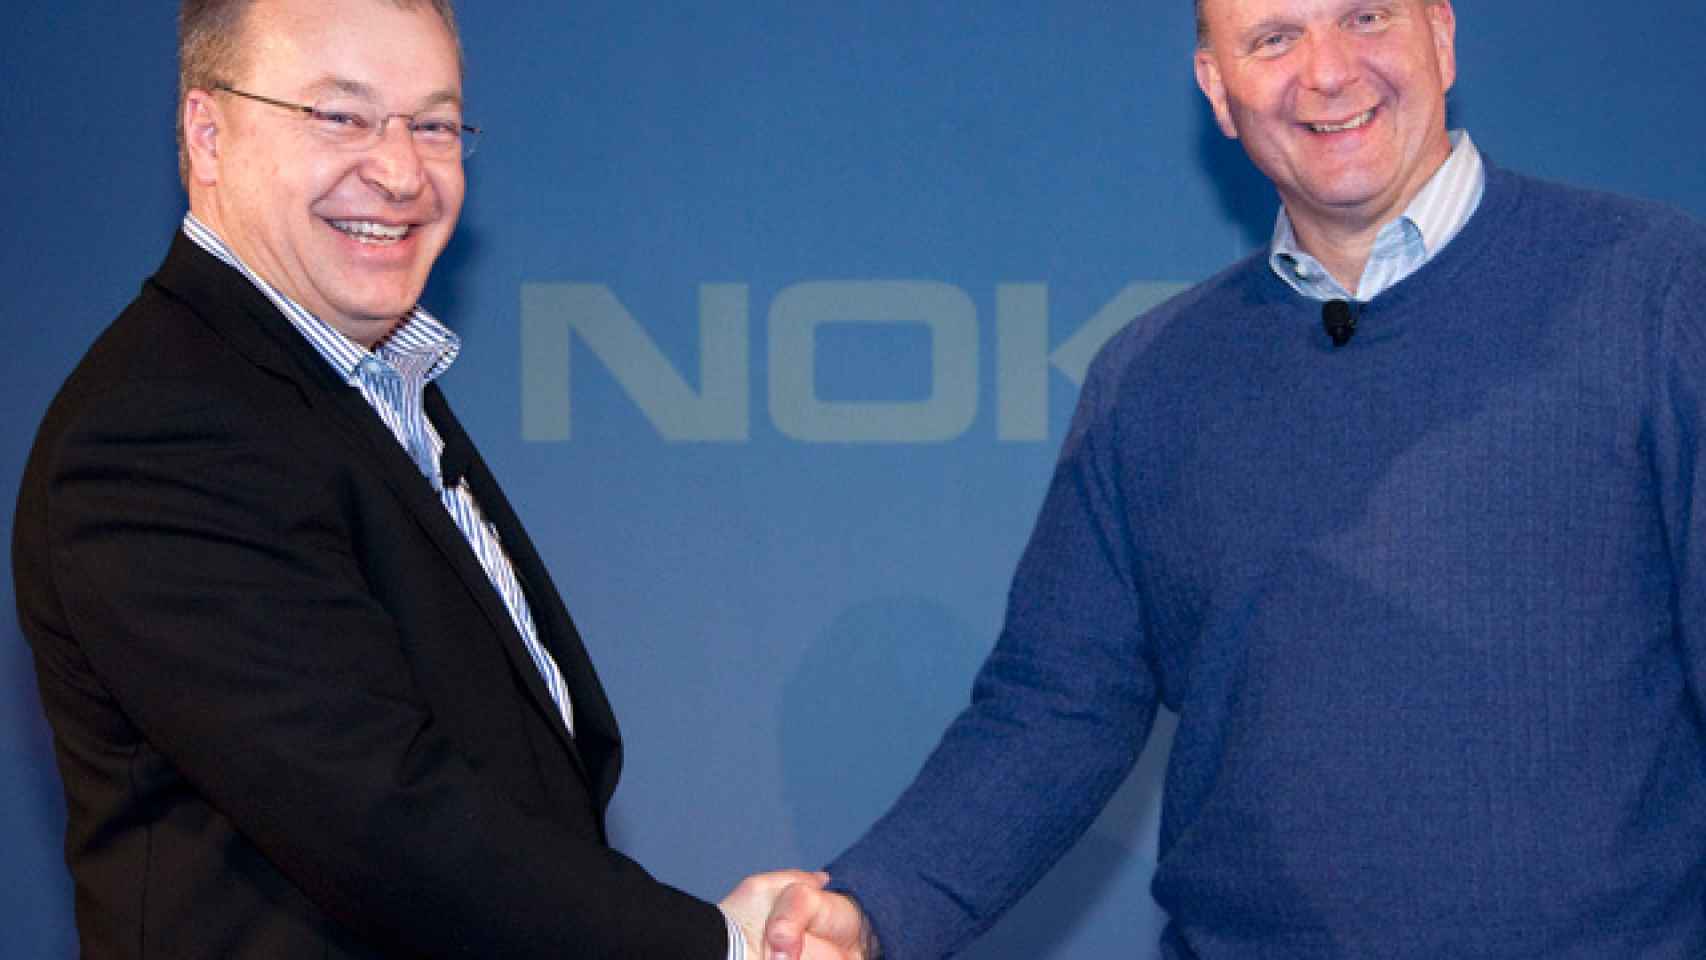 Nokia y Microsoft